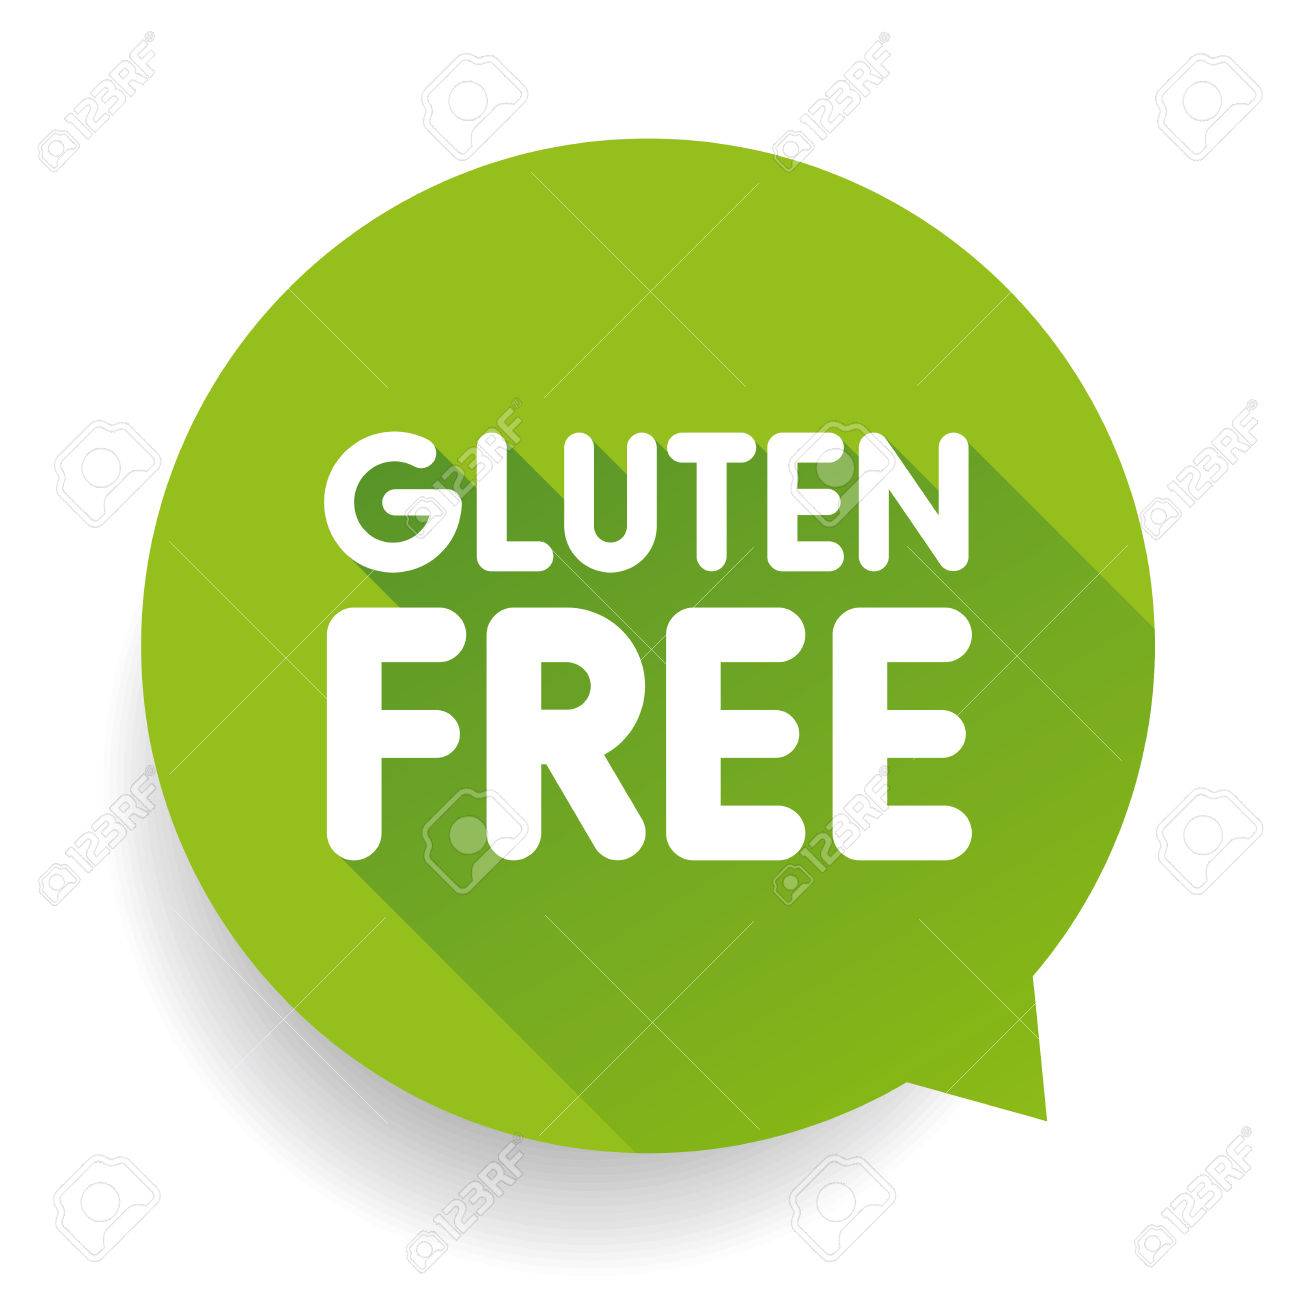 Gluten - Free food icons